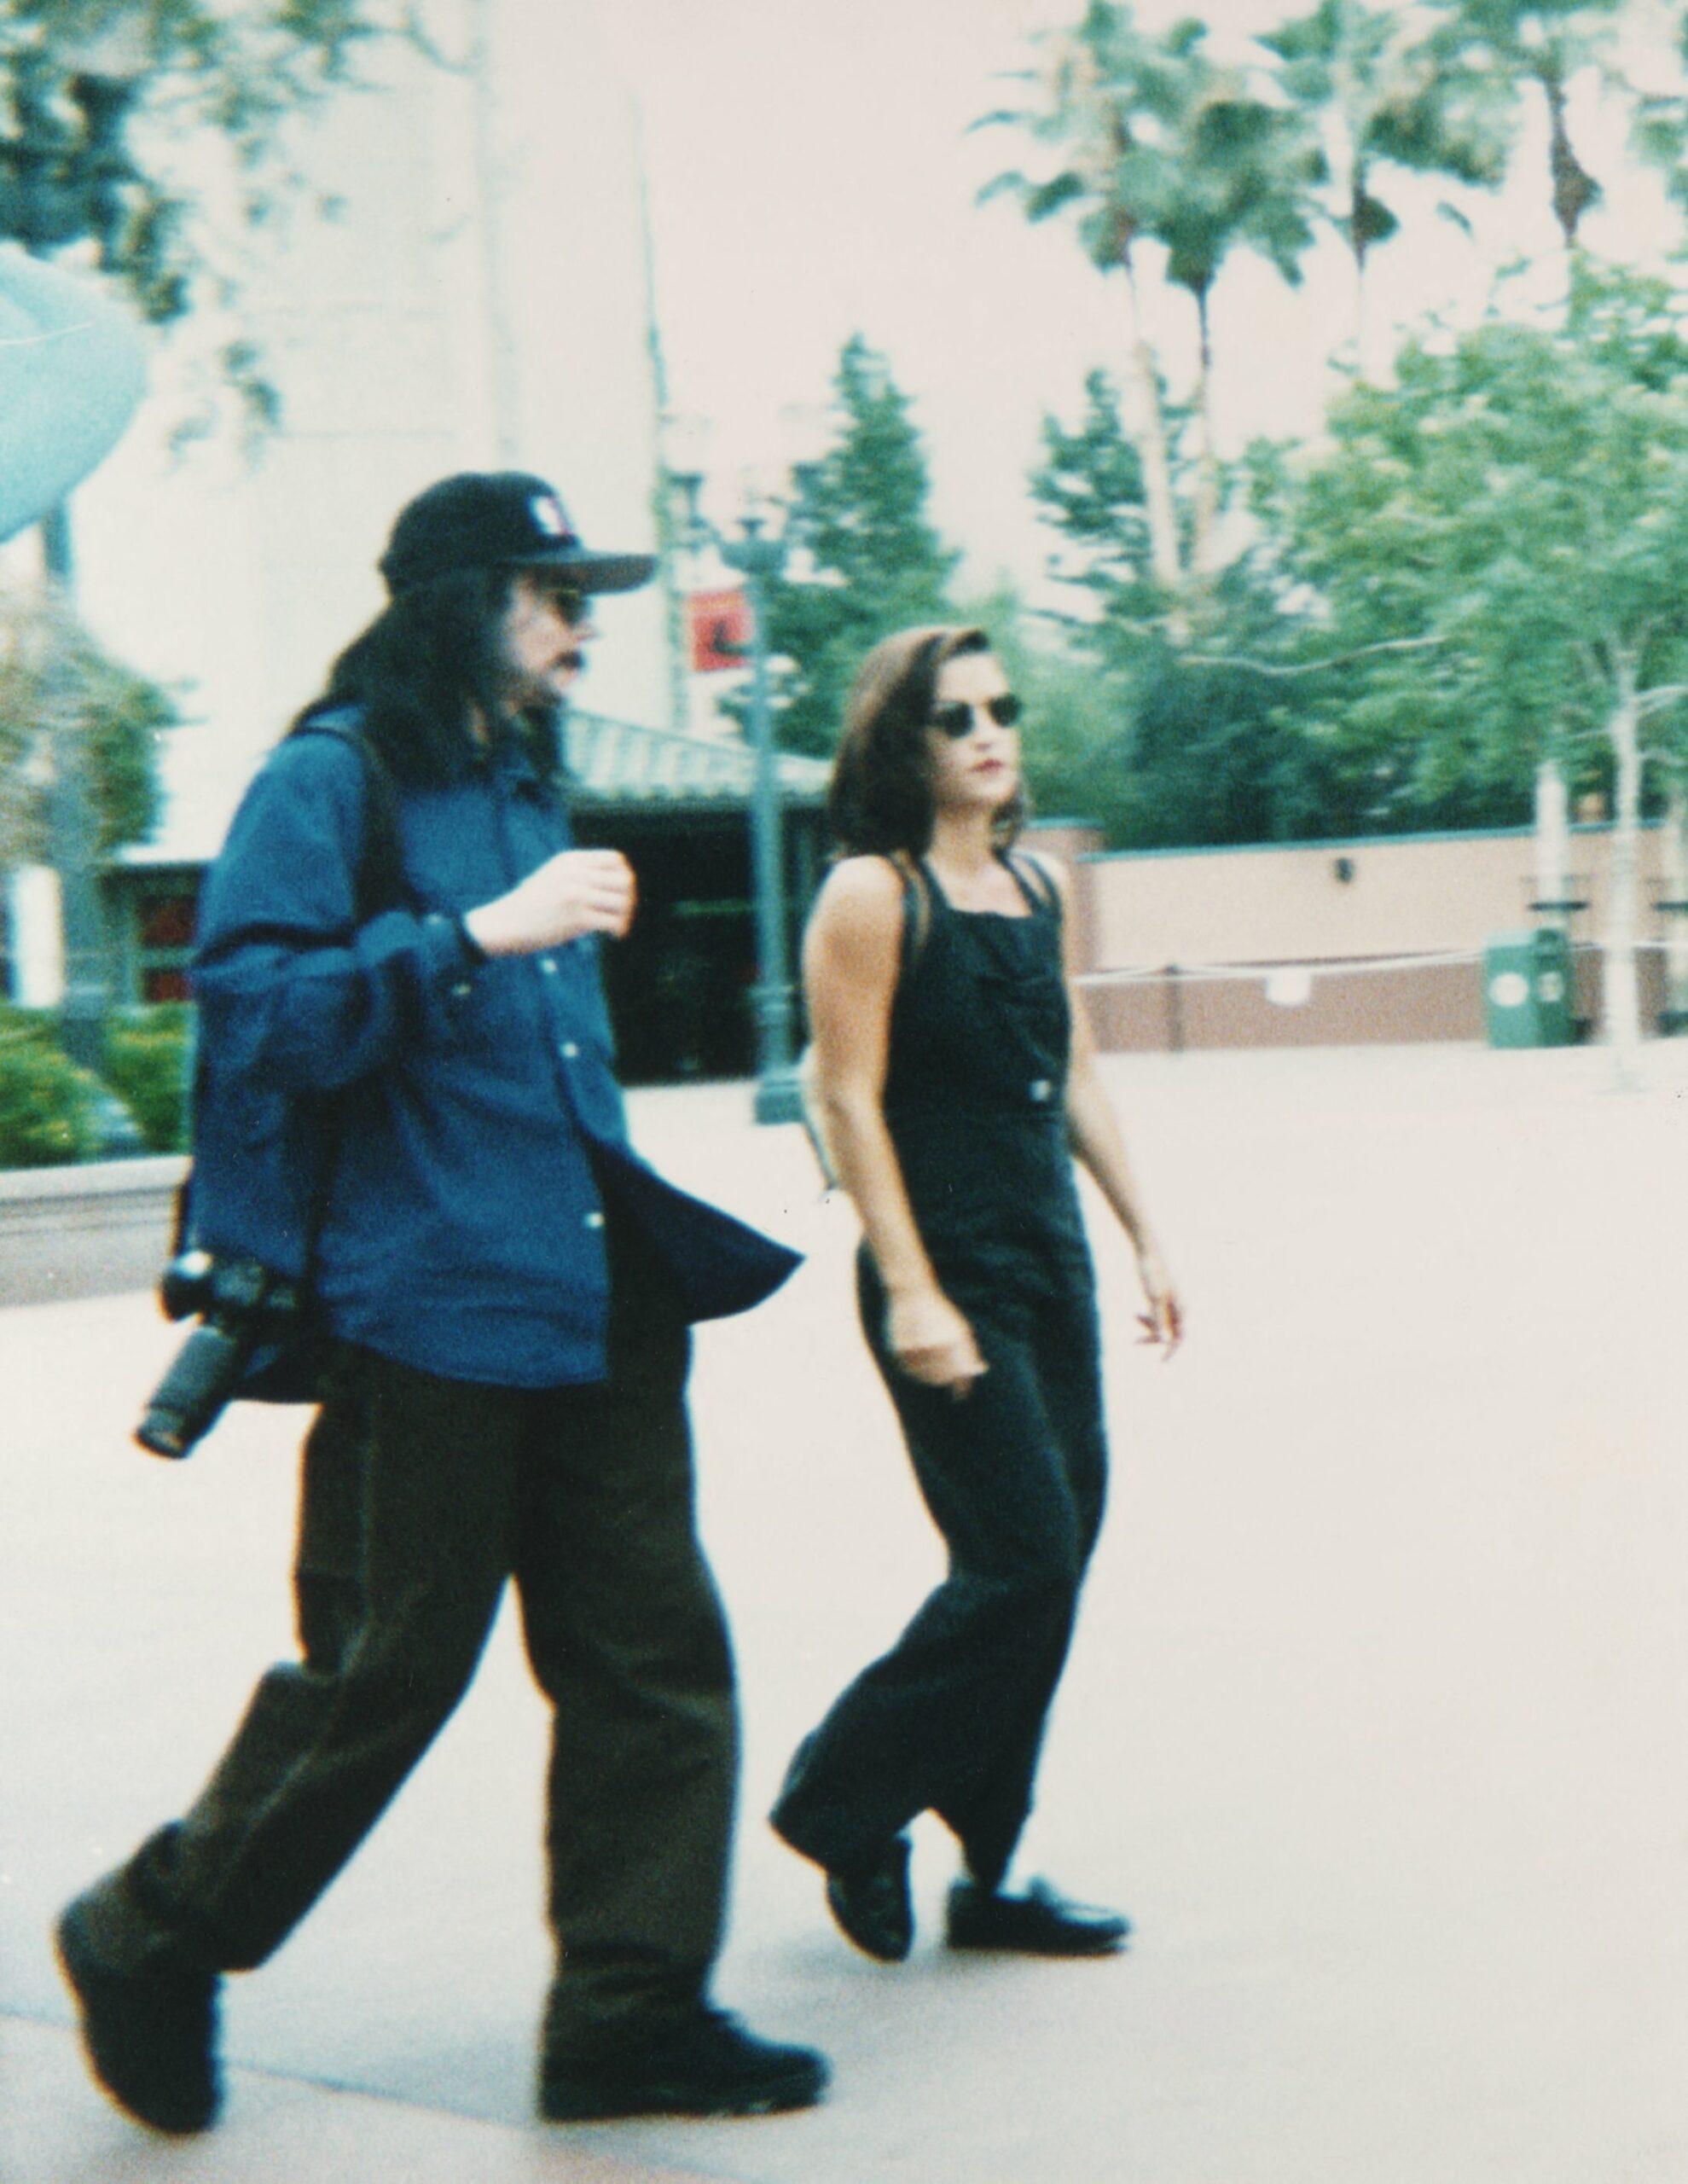 Michael Jackson and his wife Lisa Marie Presley